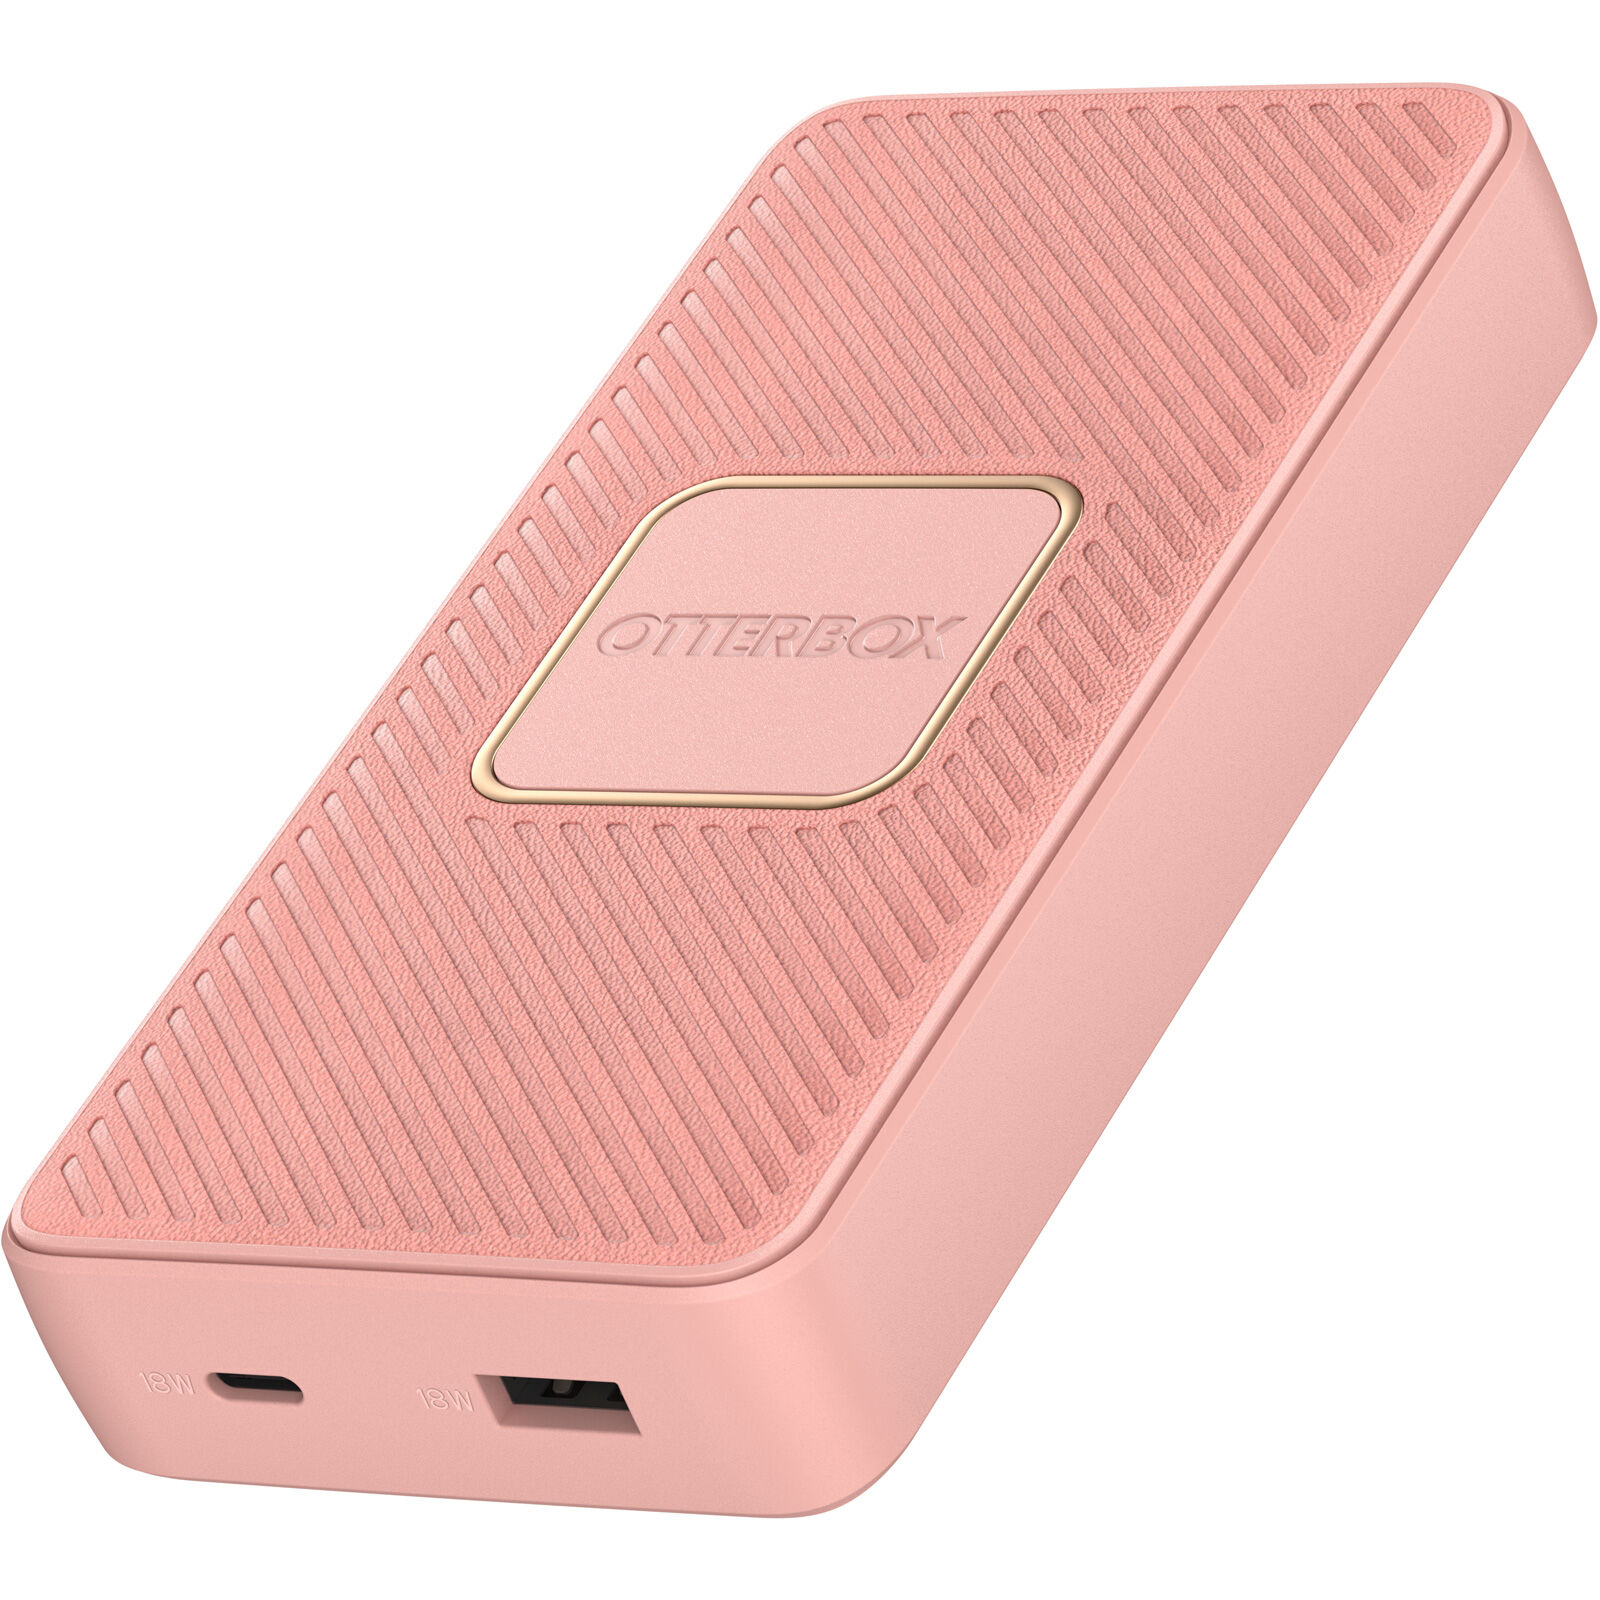  Wireless Powerbank - pink